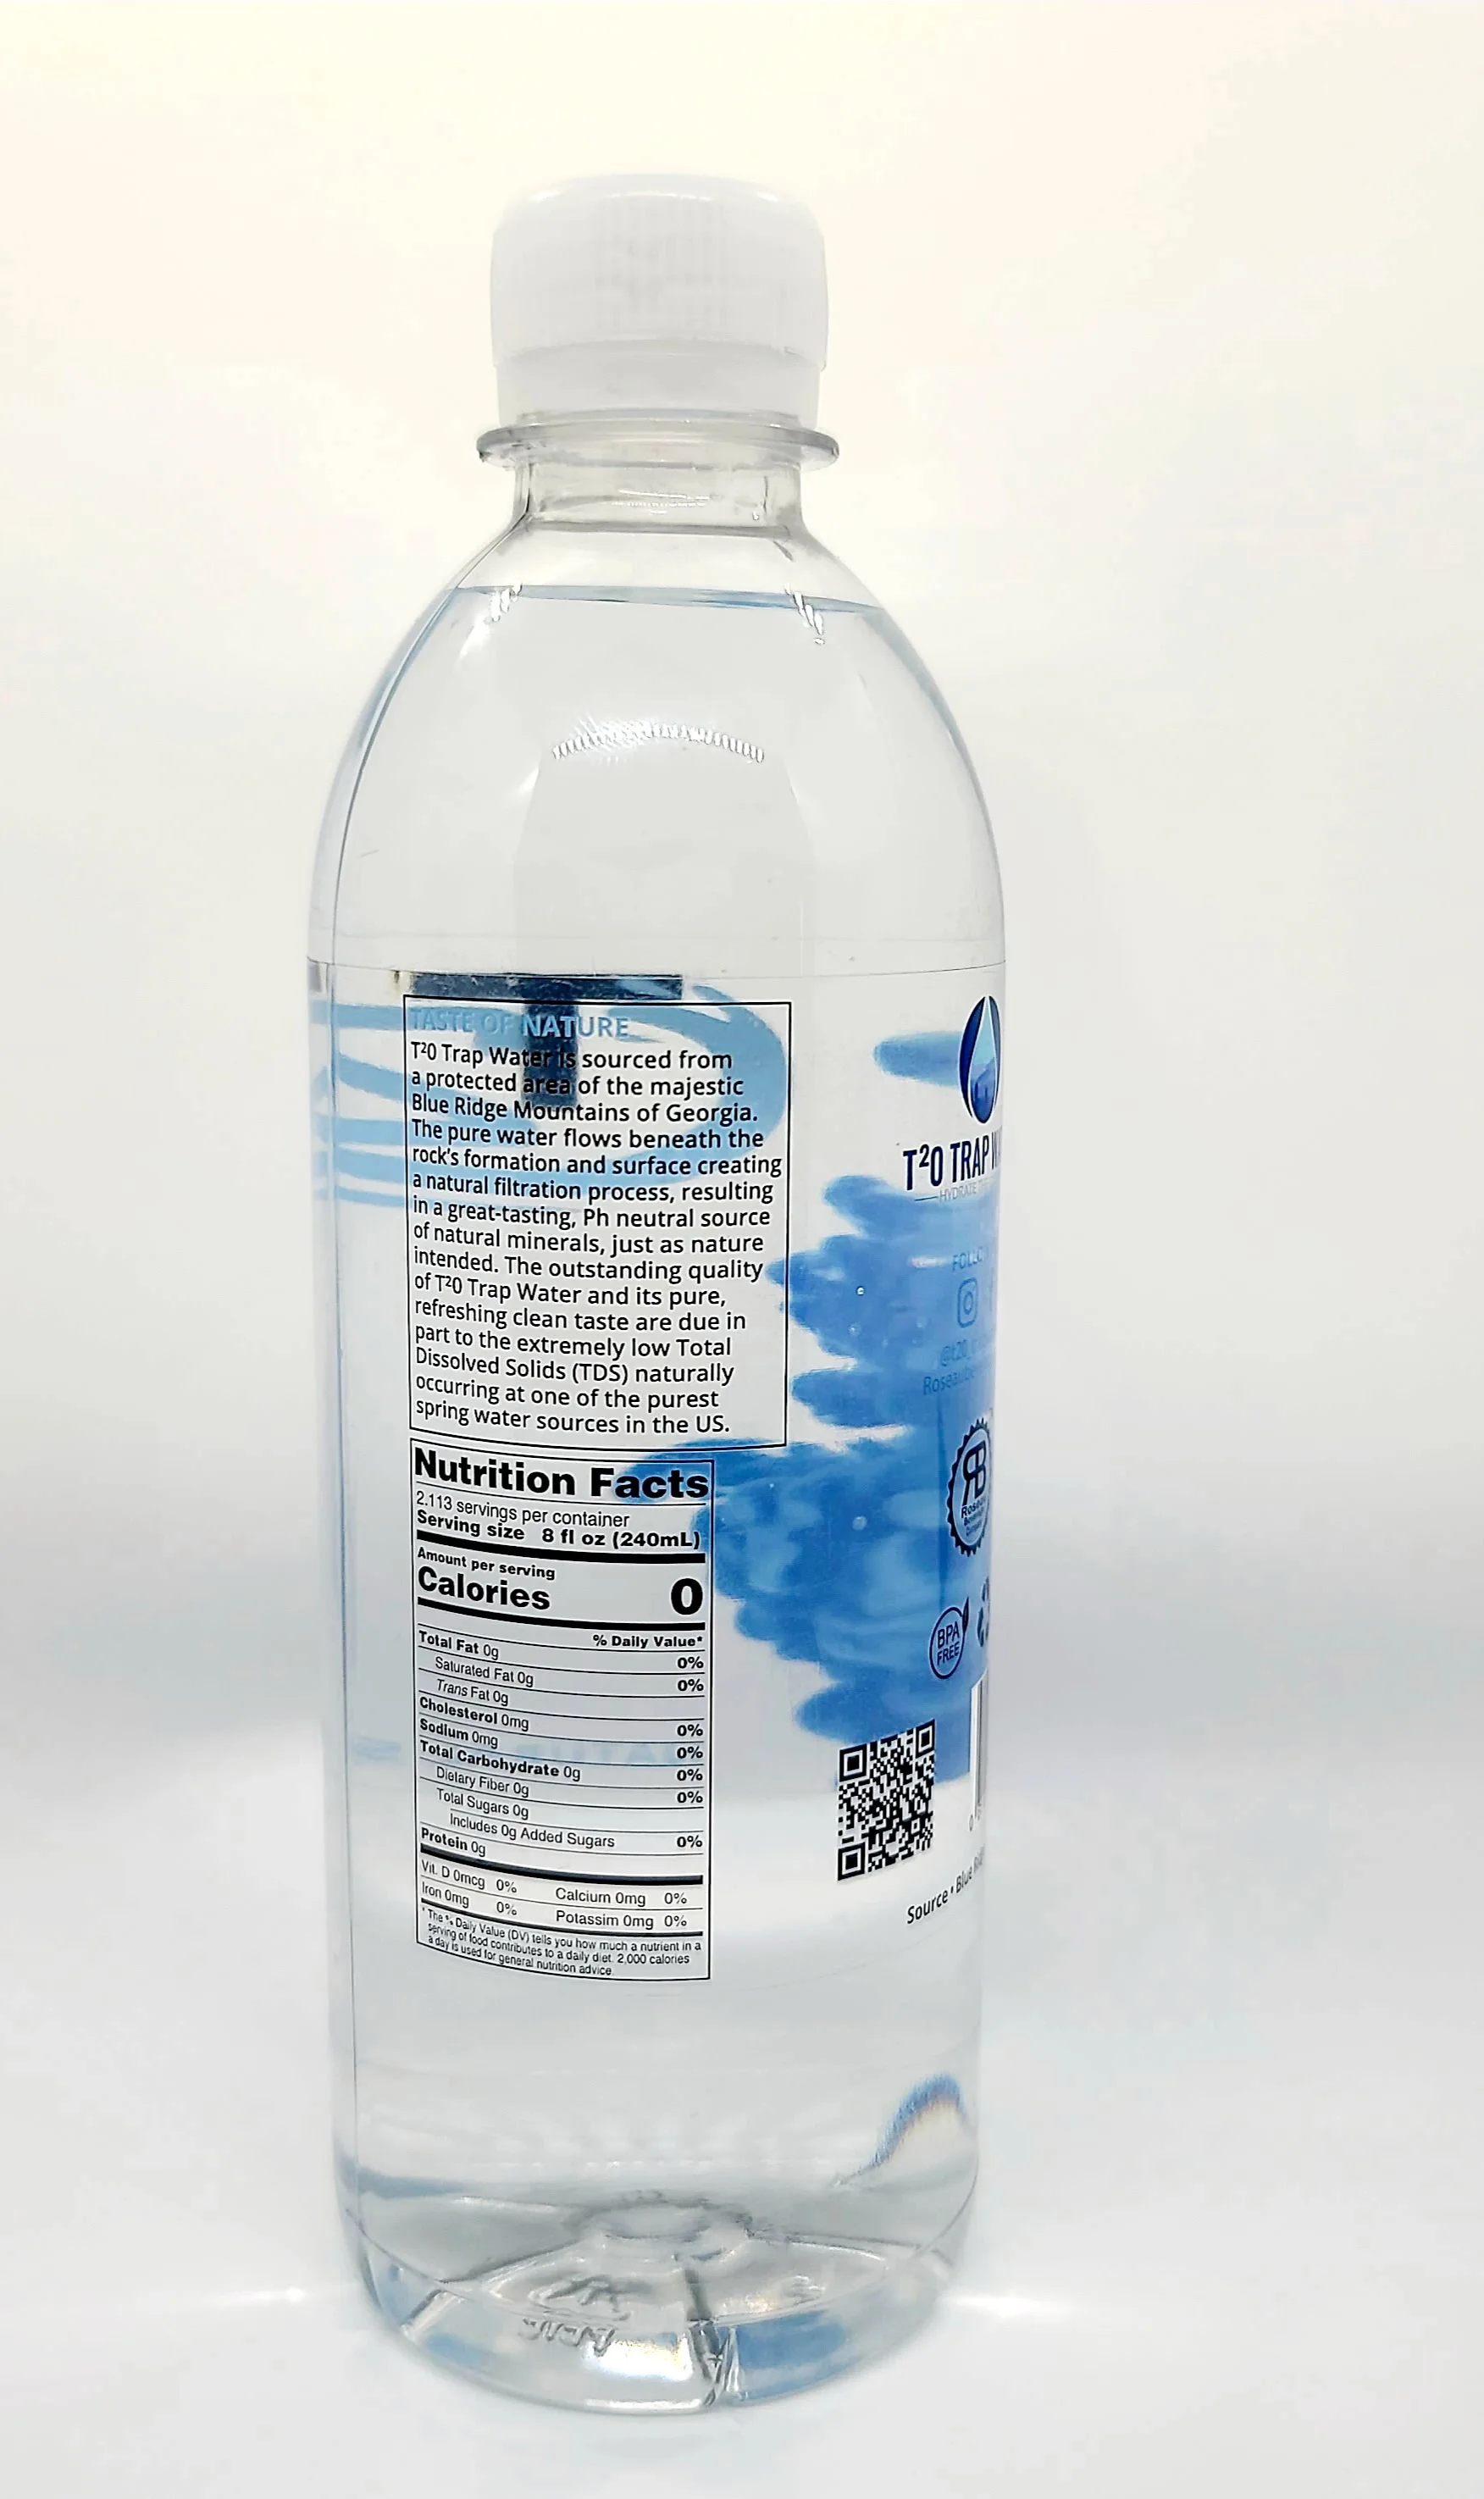 
Blue Ridge Mountain Freshness Water Fresh Taste T20 Trap Water 16.9 FL OZ & 20 FL OZ 100% ALL Natural Spring Water 